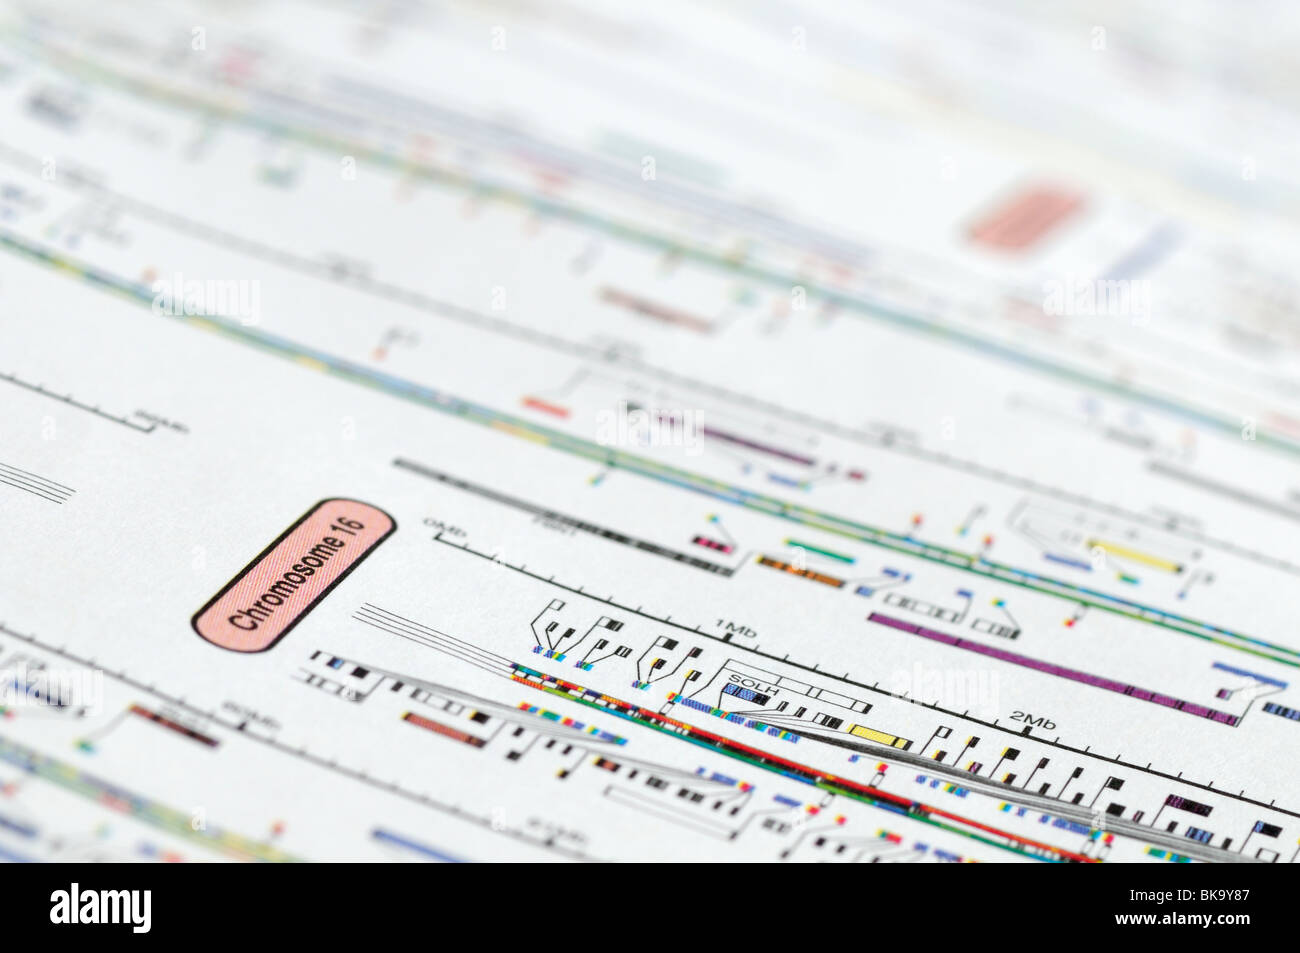 Human genome map focused on chromosome 16. Stock Photo